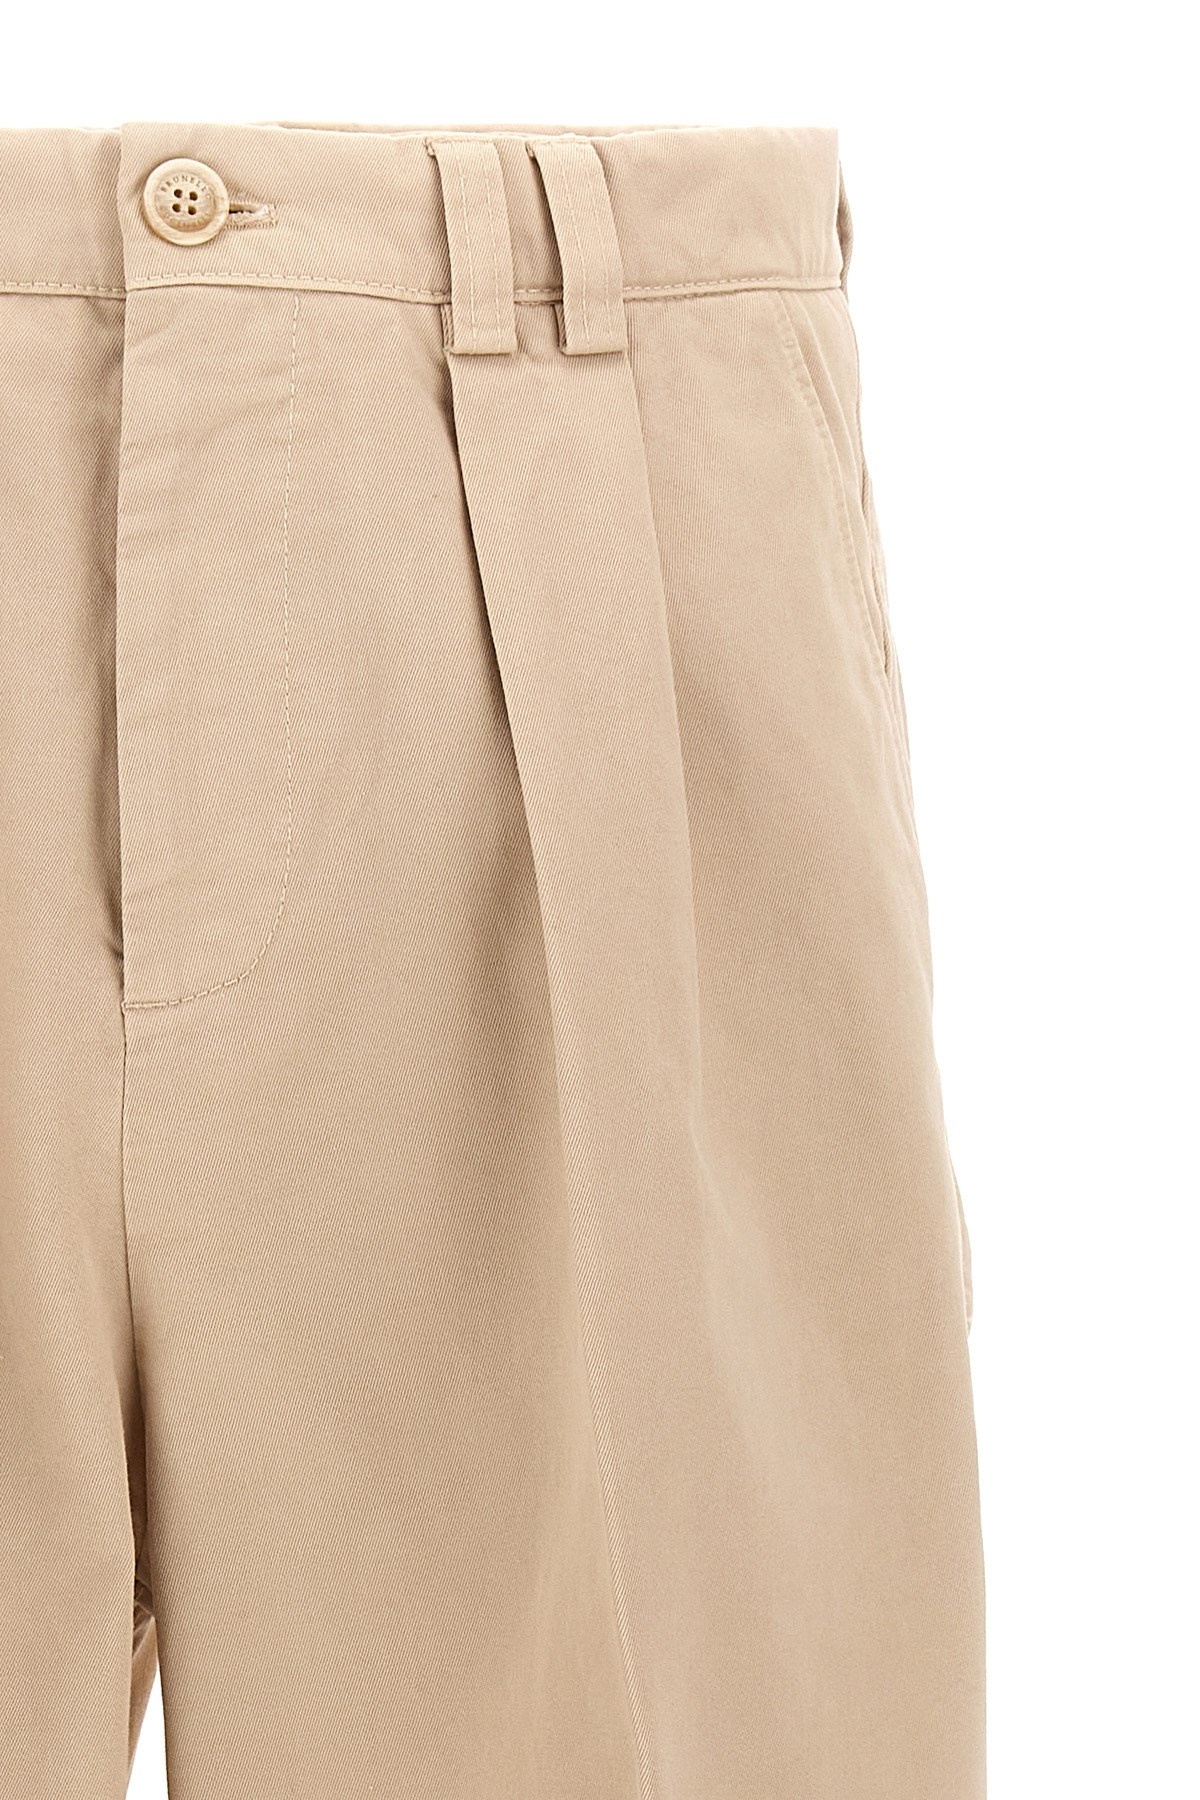 Cotton pants with front pleats - 3